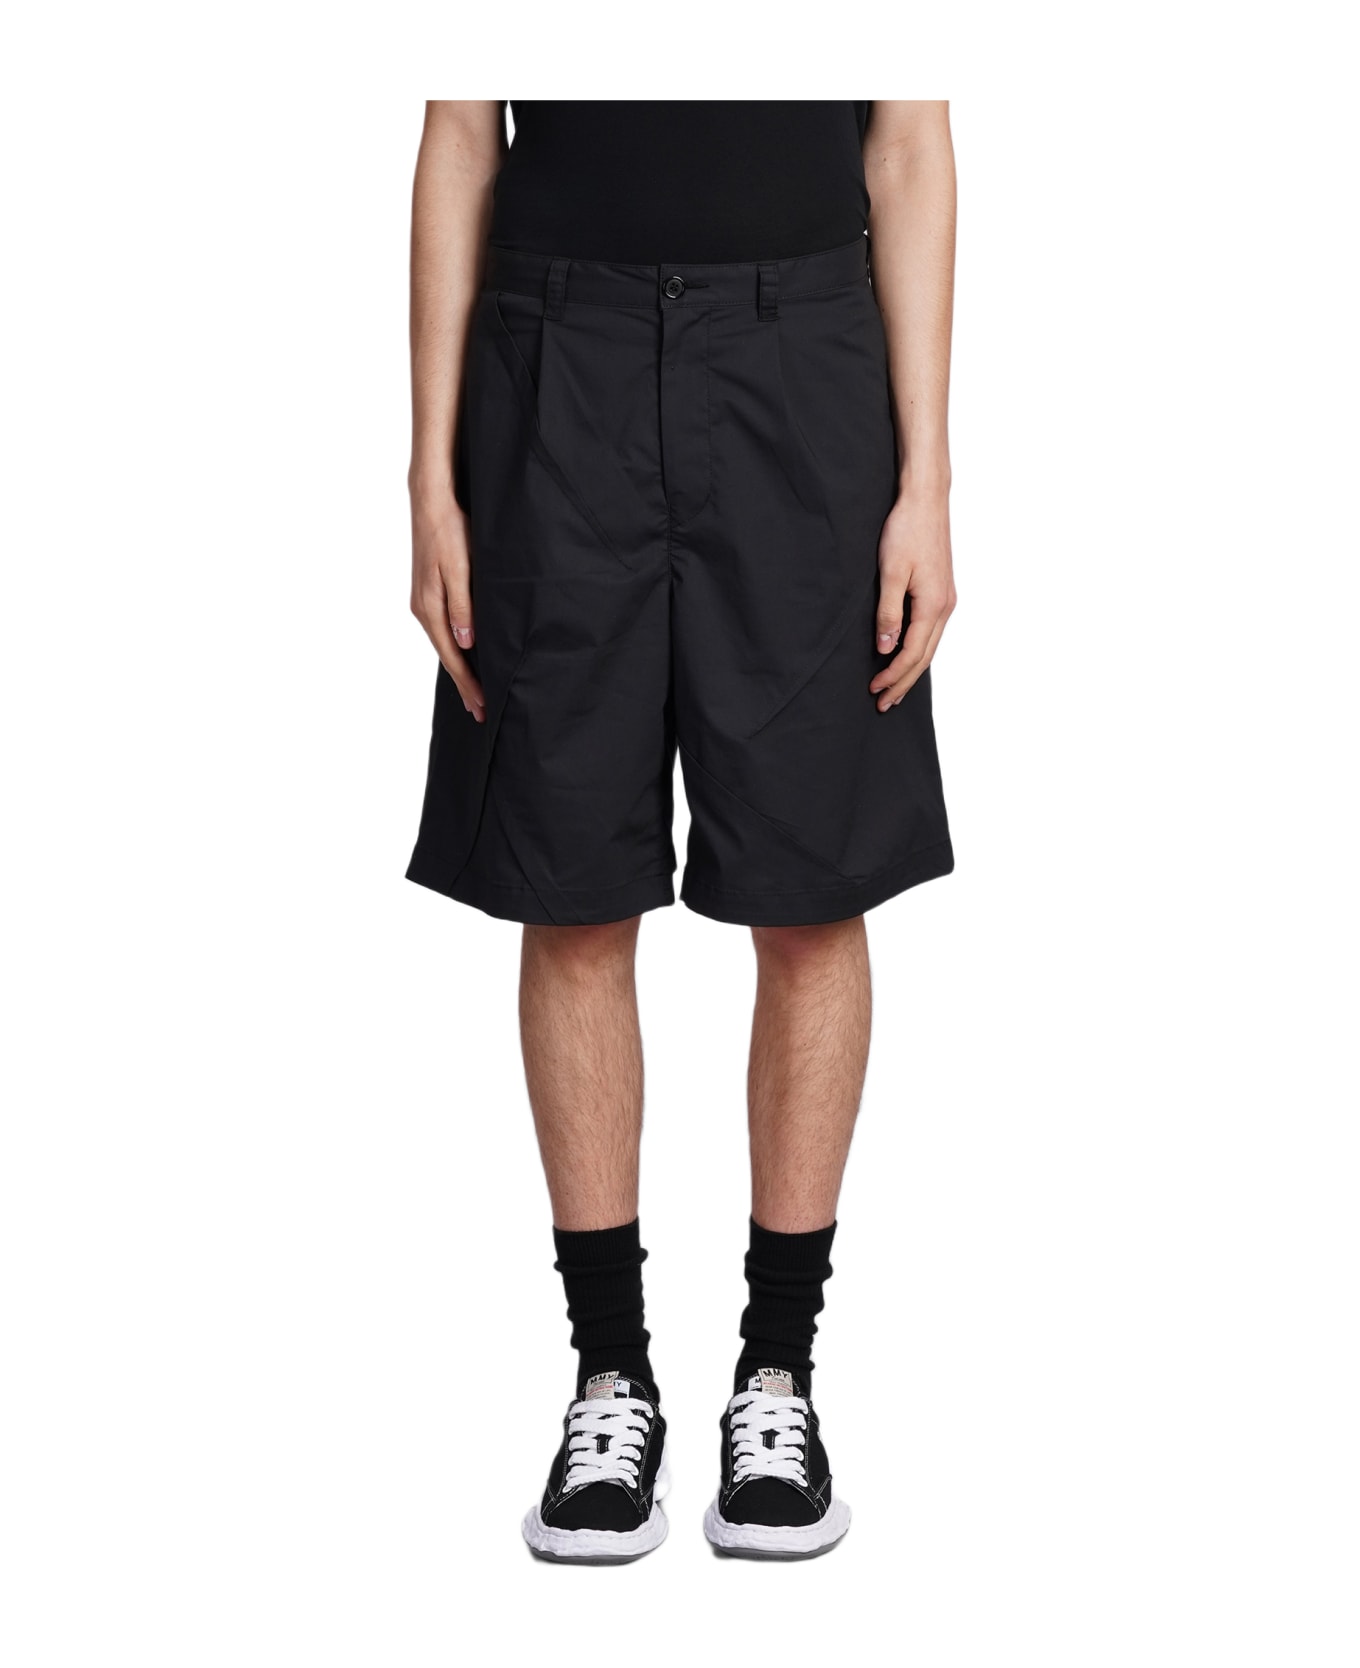 Undercover Jun Takahashi Shorts In Black Polyester - black